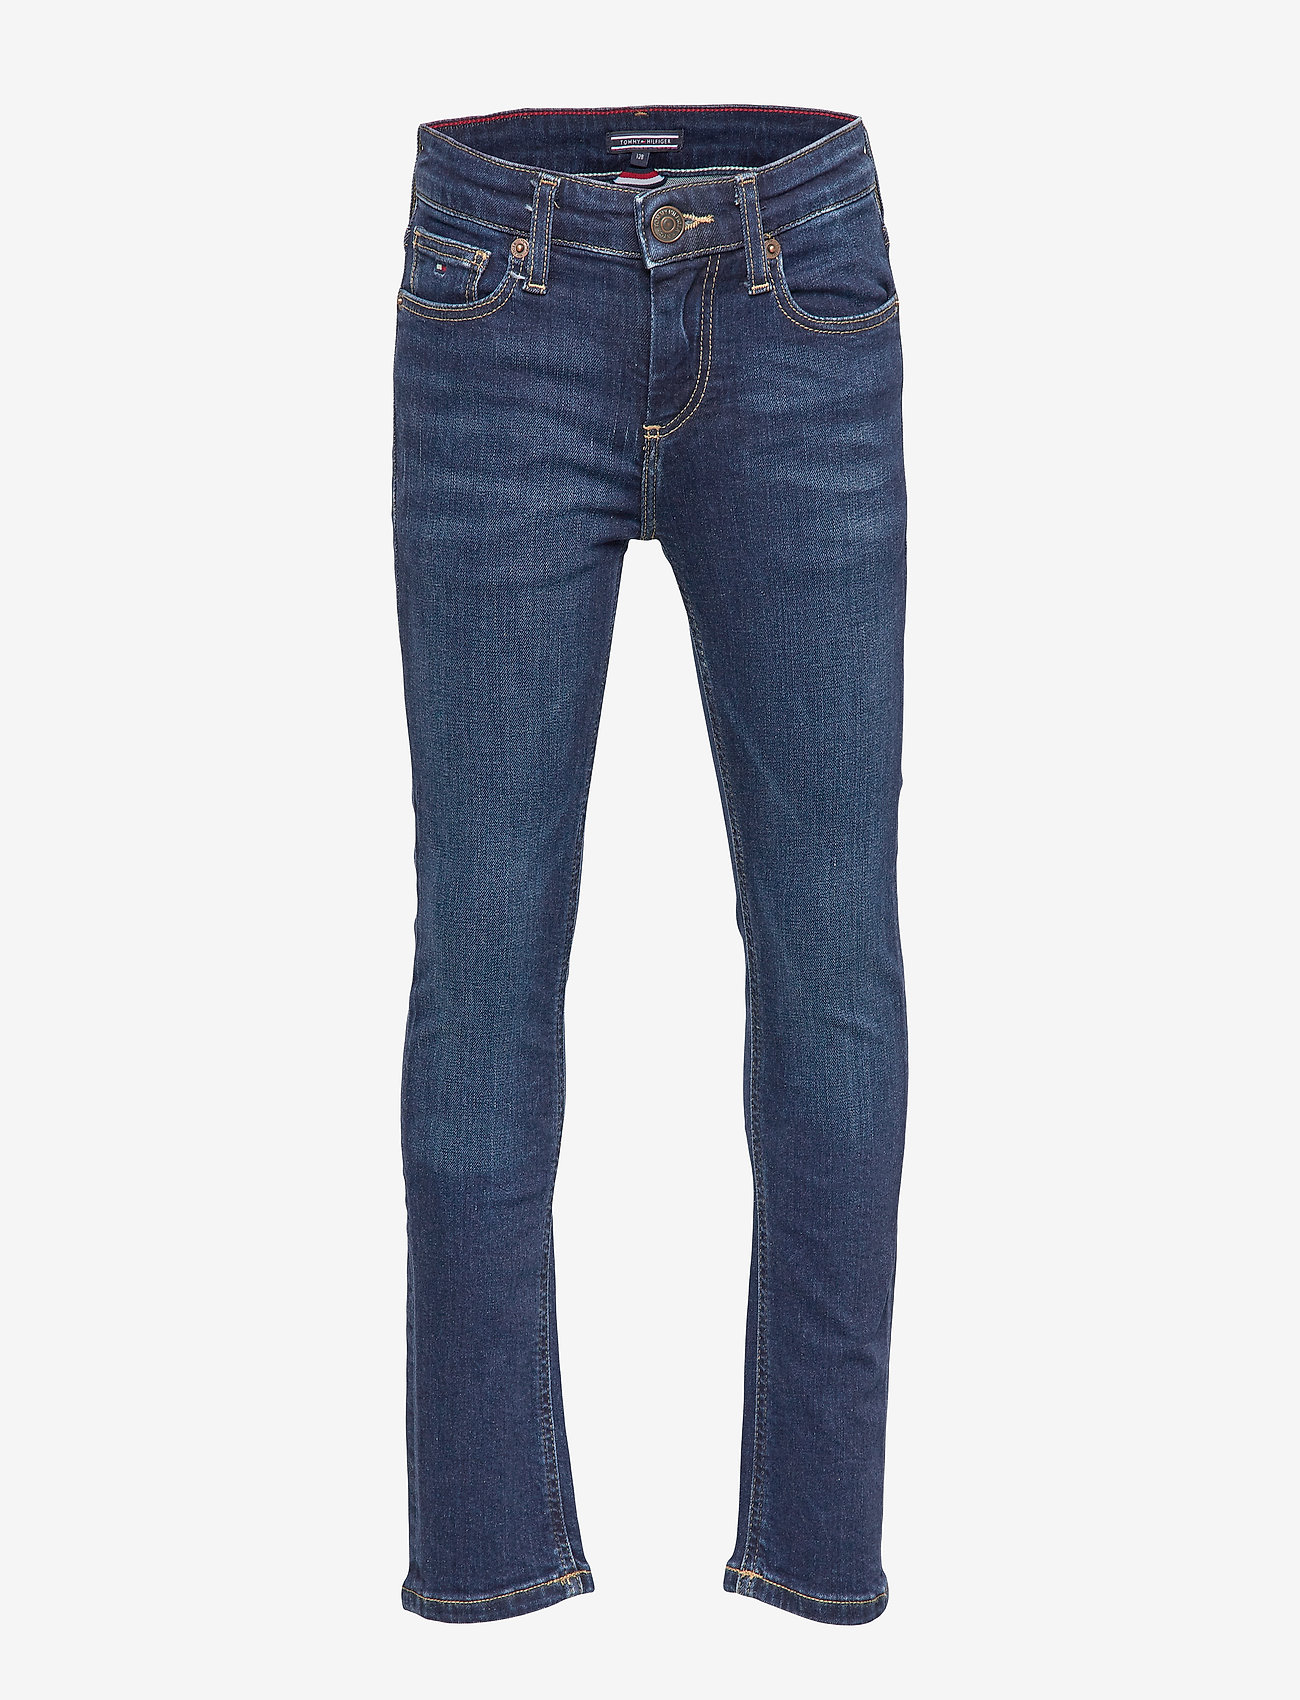 Tommy Hilfiger - BOYS SCANTON SLIM NYDS - skinny jeans - new york dark stretch - 0